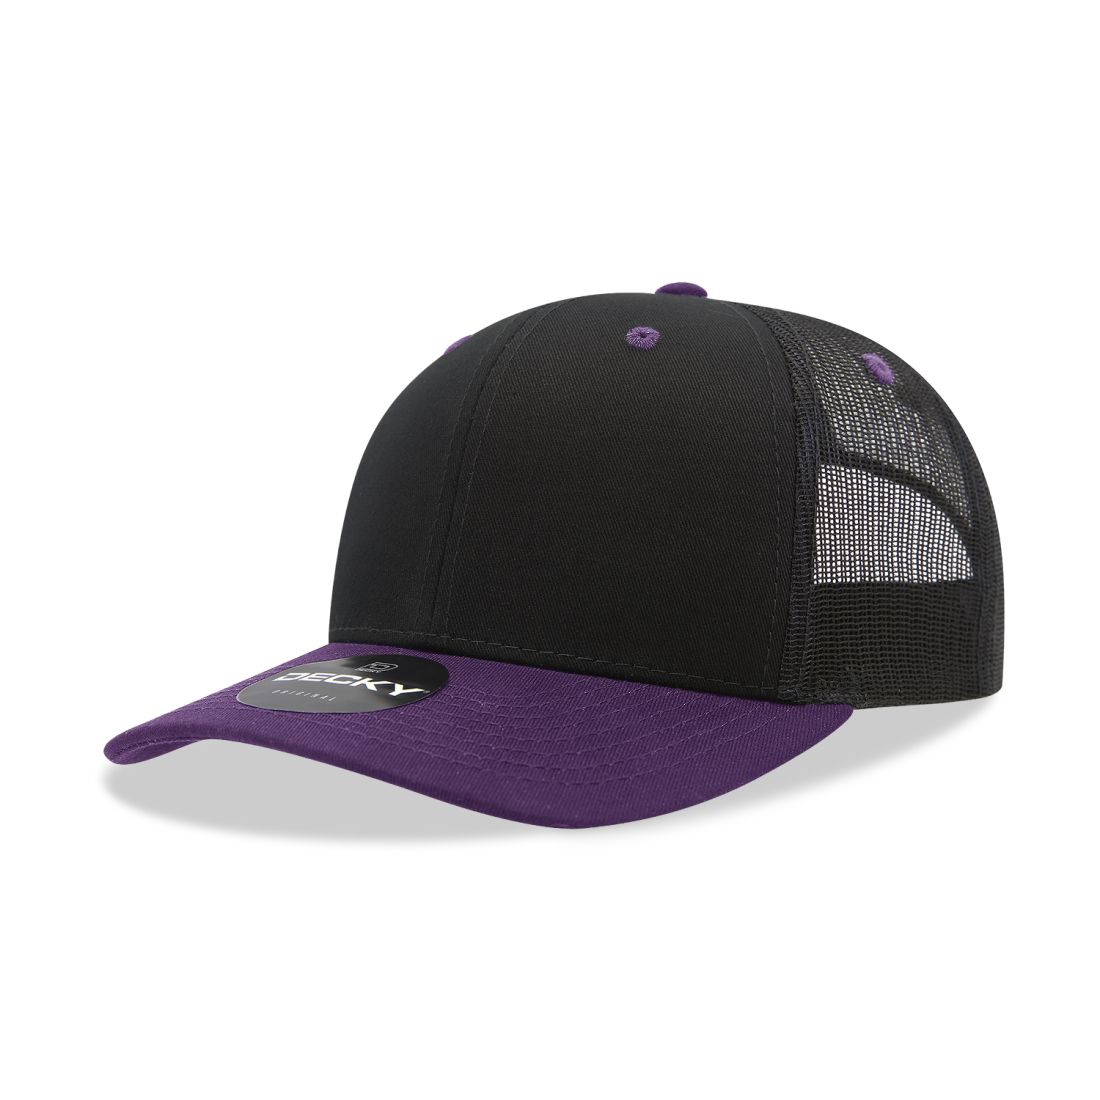 Black/Purple color variant